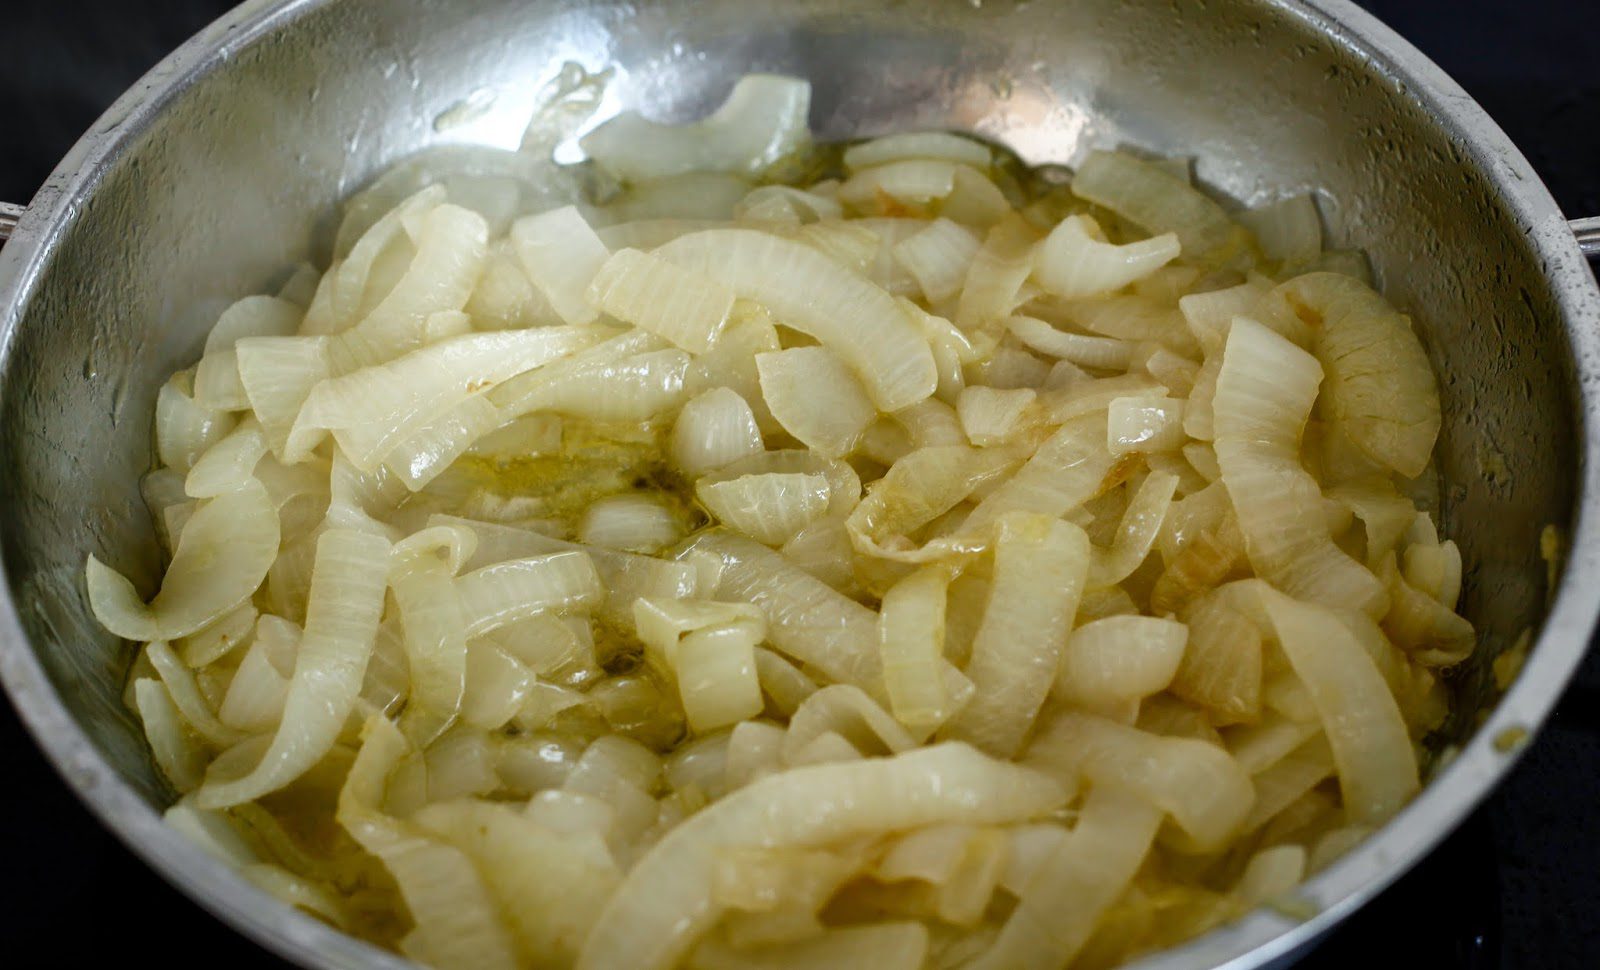 Caramelised balsamic onions